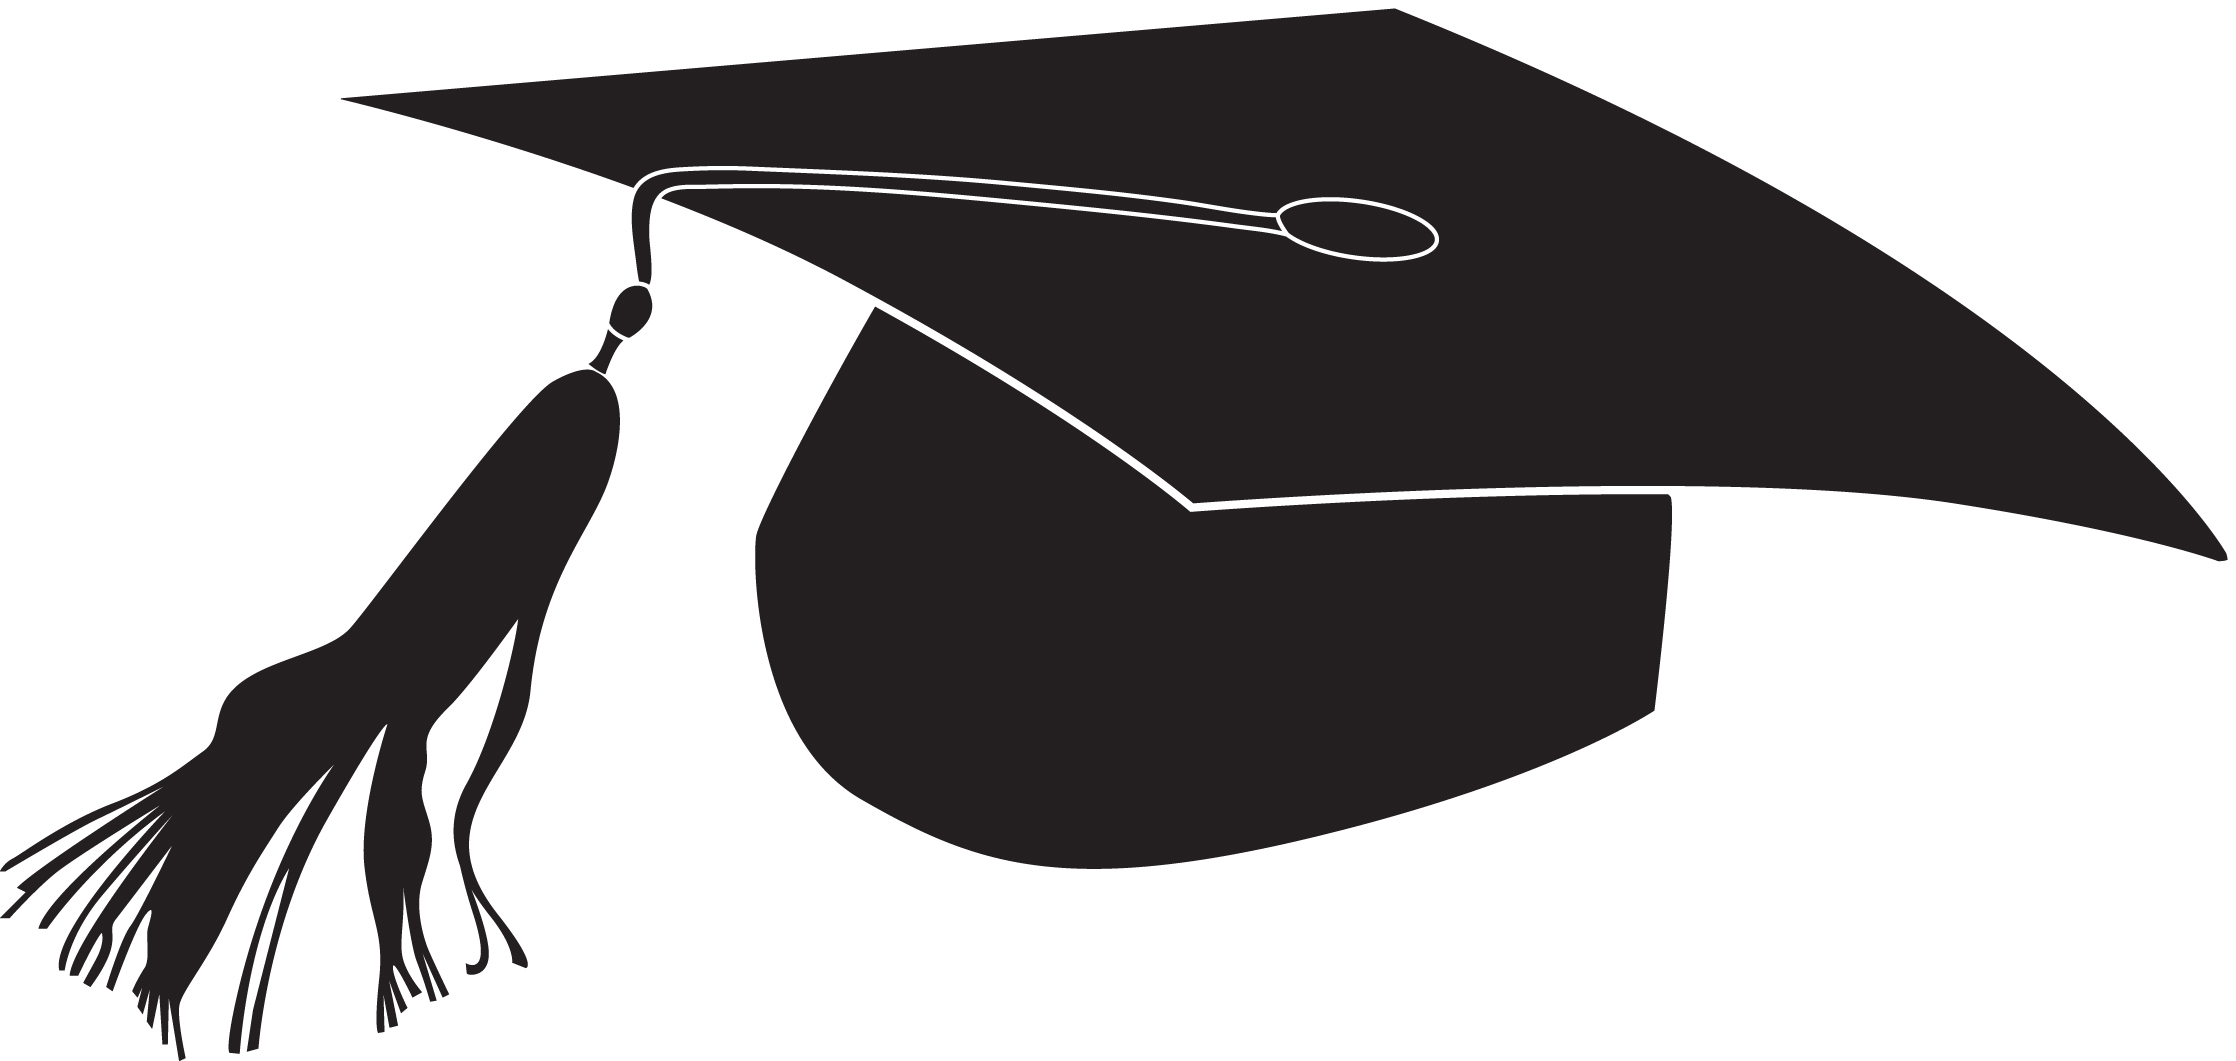 graduation hat clipart black and white - photo #26